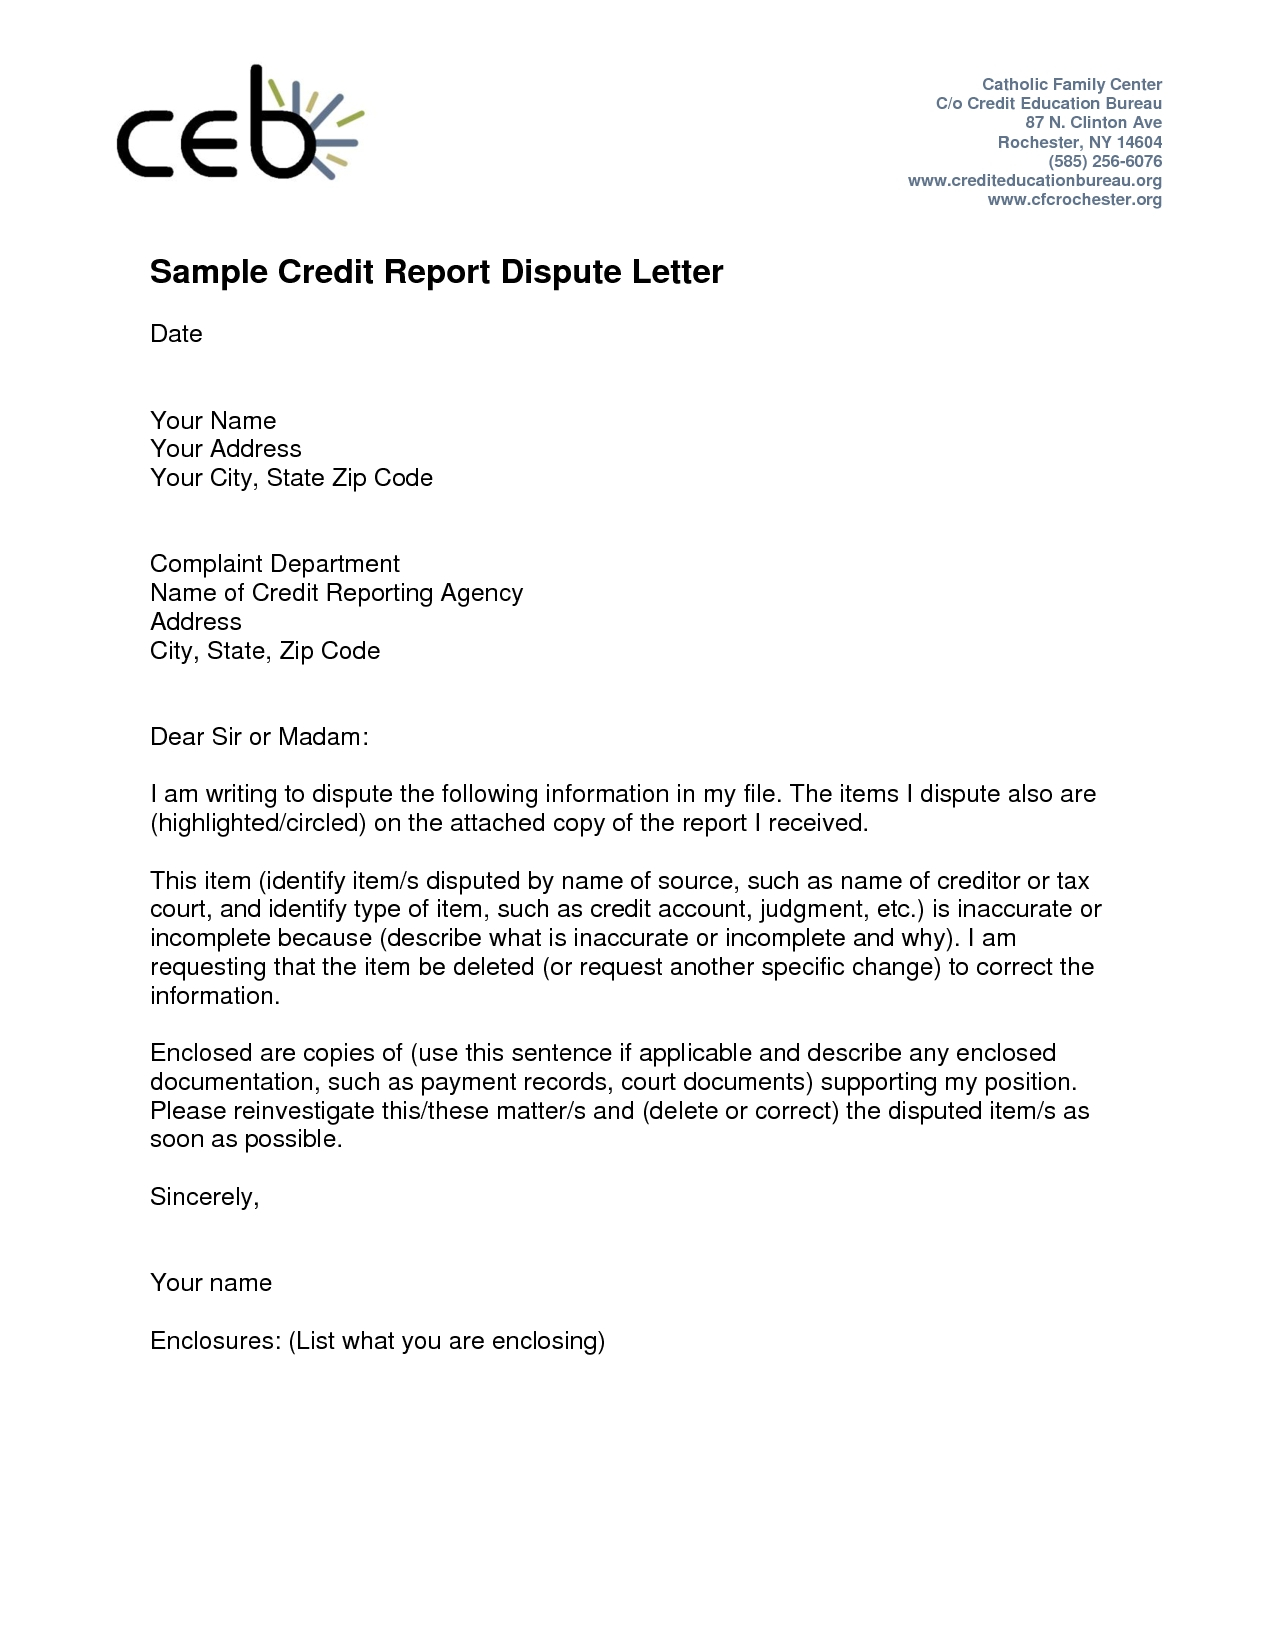 Credit Dispute Letter Template - Credit Dispute Letter Templates Acurnamedia